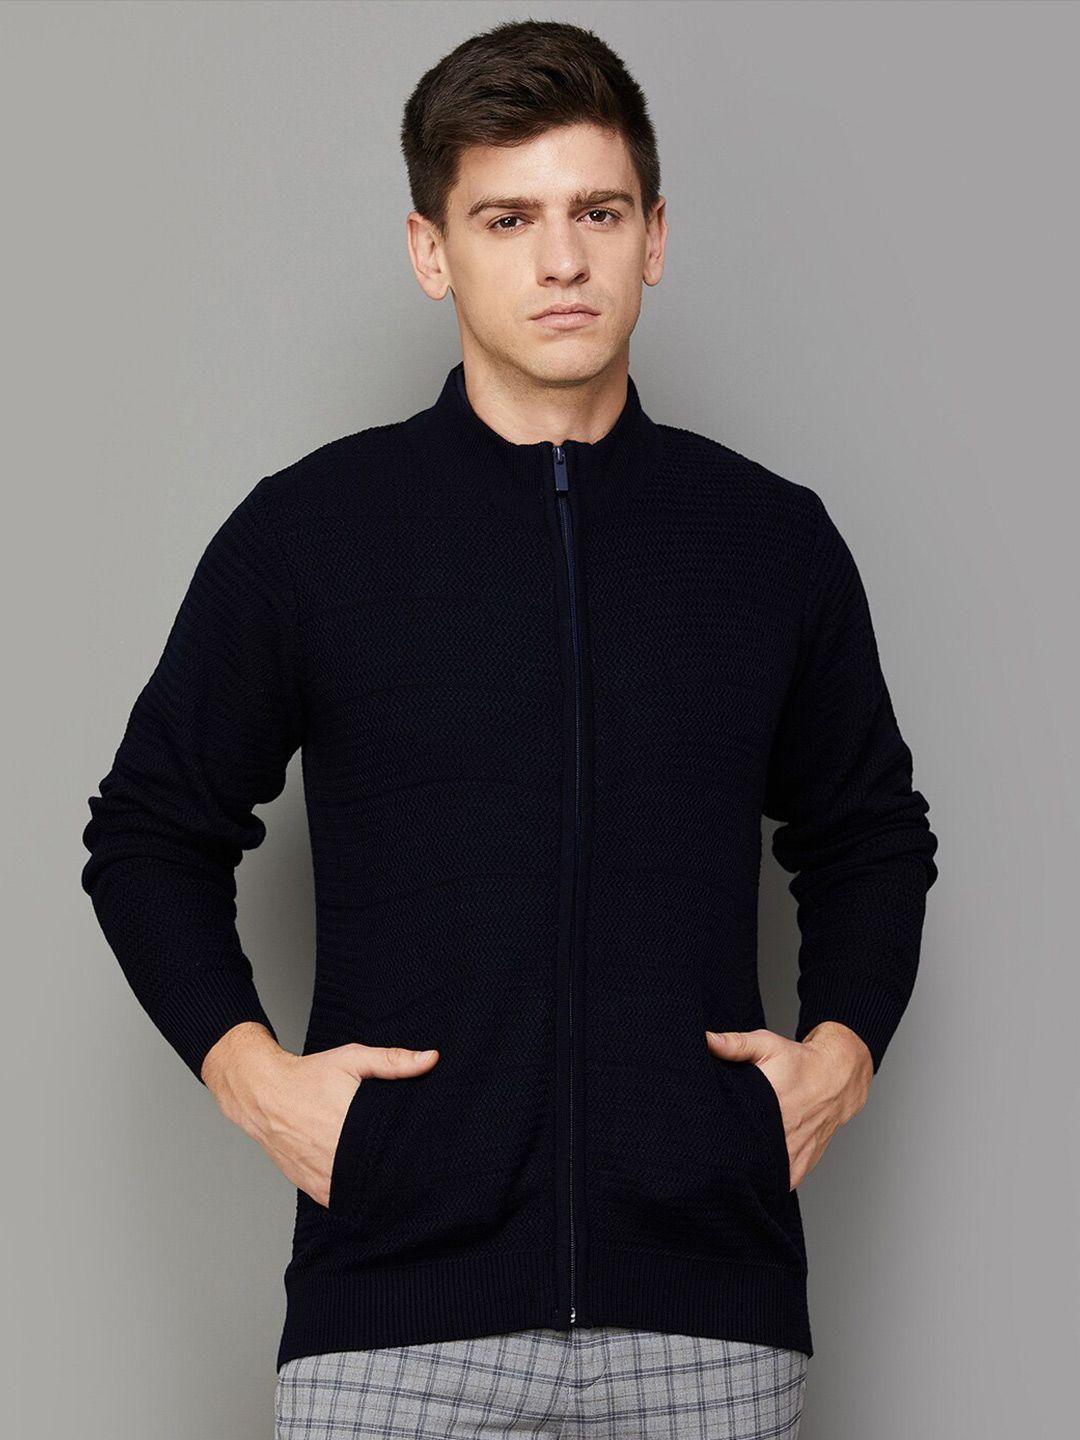 code by lifestyle mock collar acrylic cardigan sweater